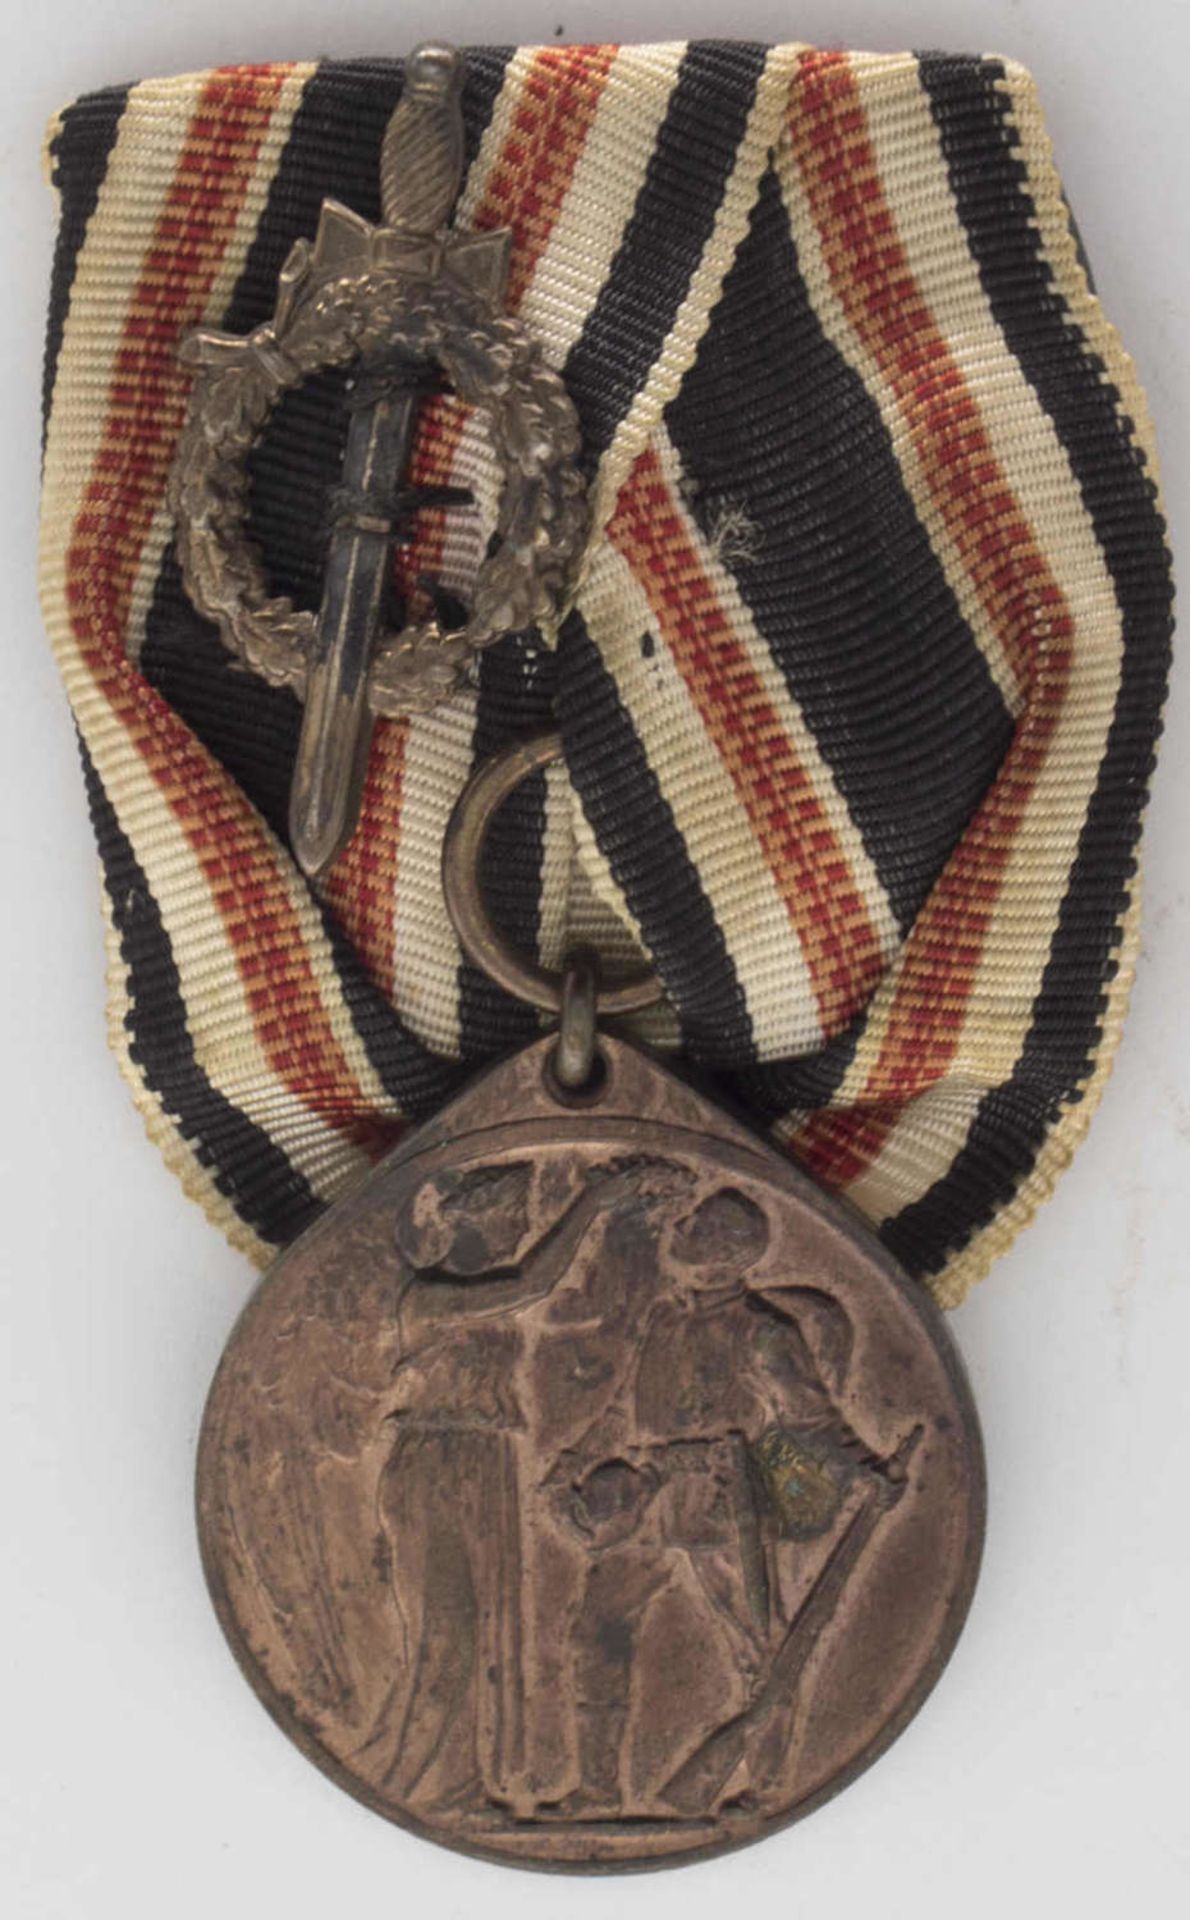 German commemorative medal of World War I combat badge. At the band.